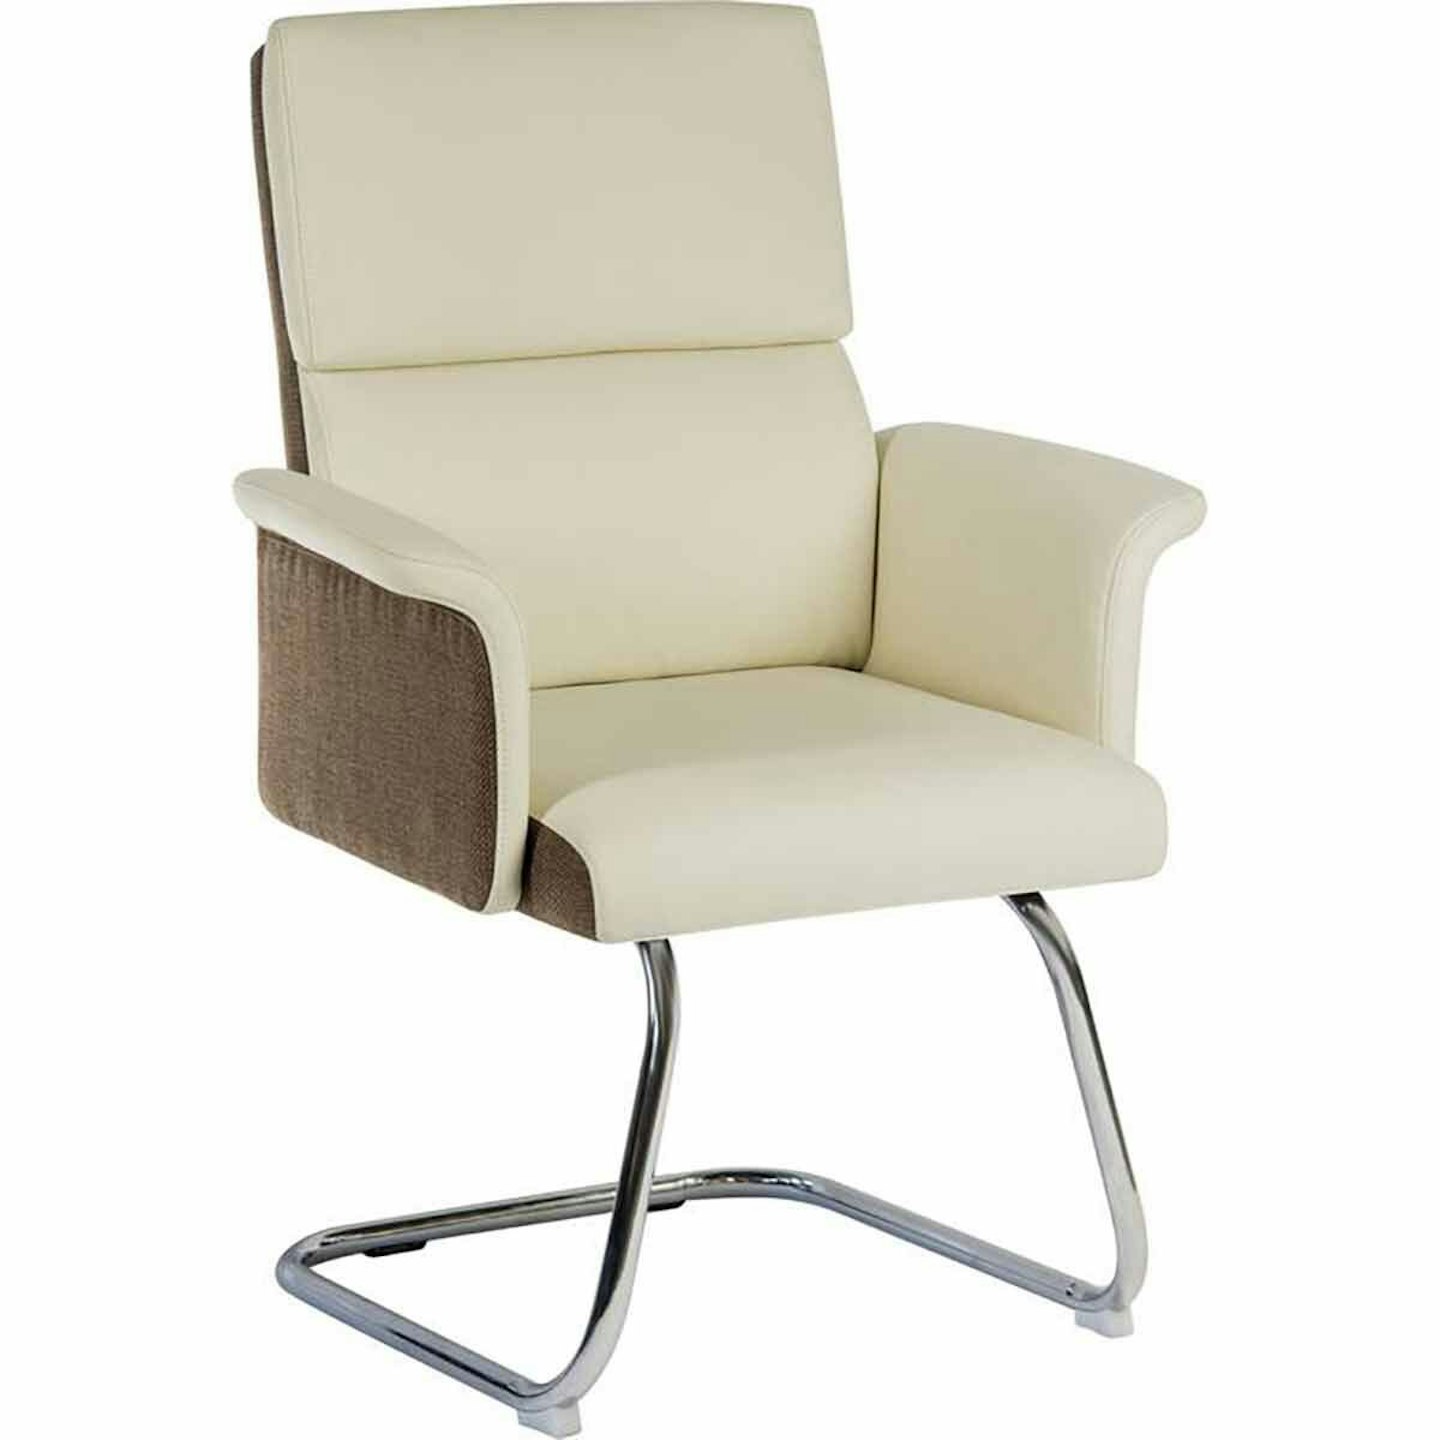 Rymans, Teknik Elegance Visitor Chair, £149.99